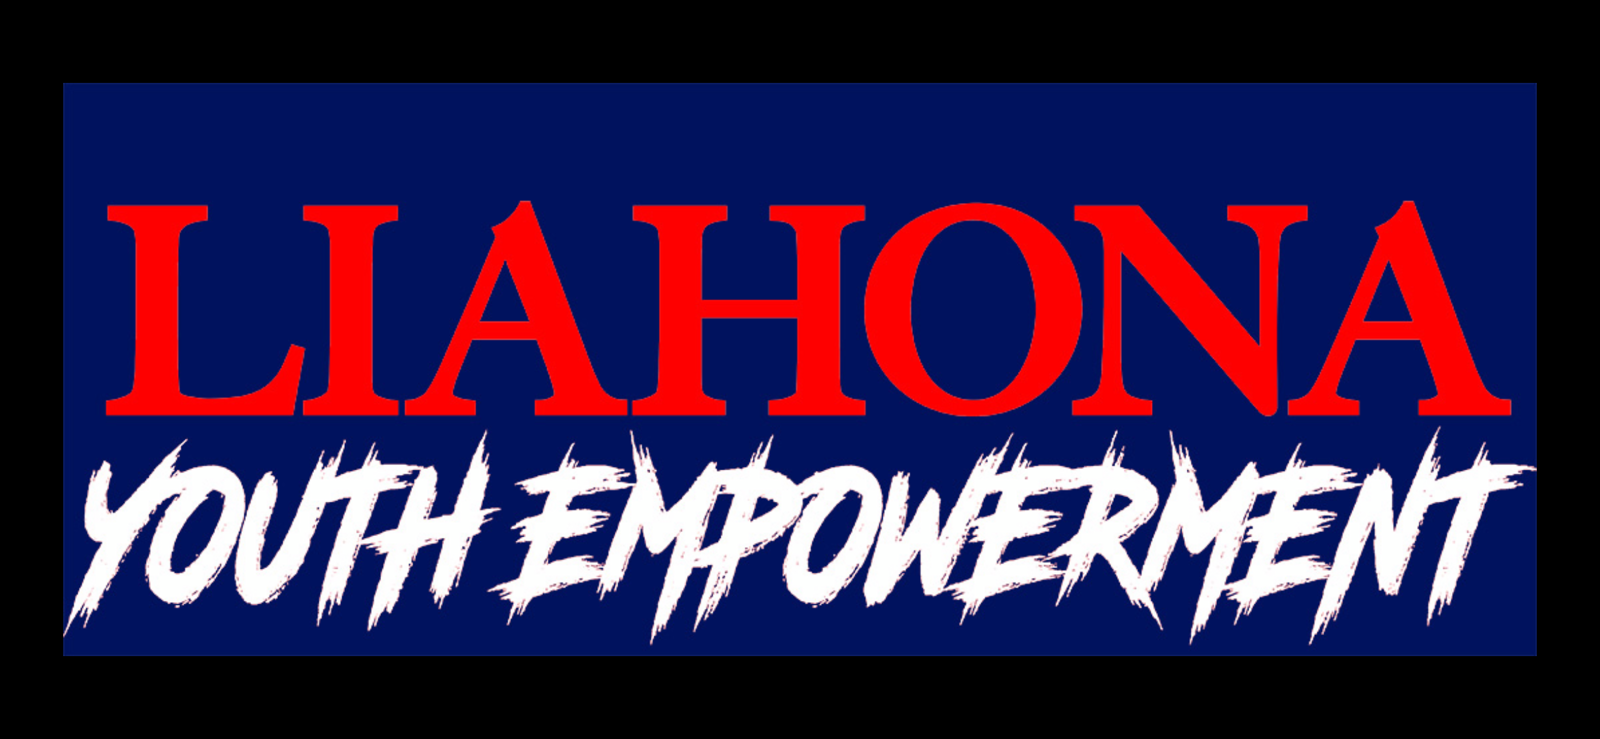 Liahona Youth Empowerment